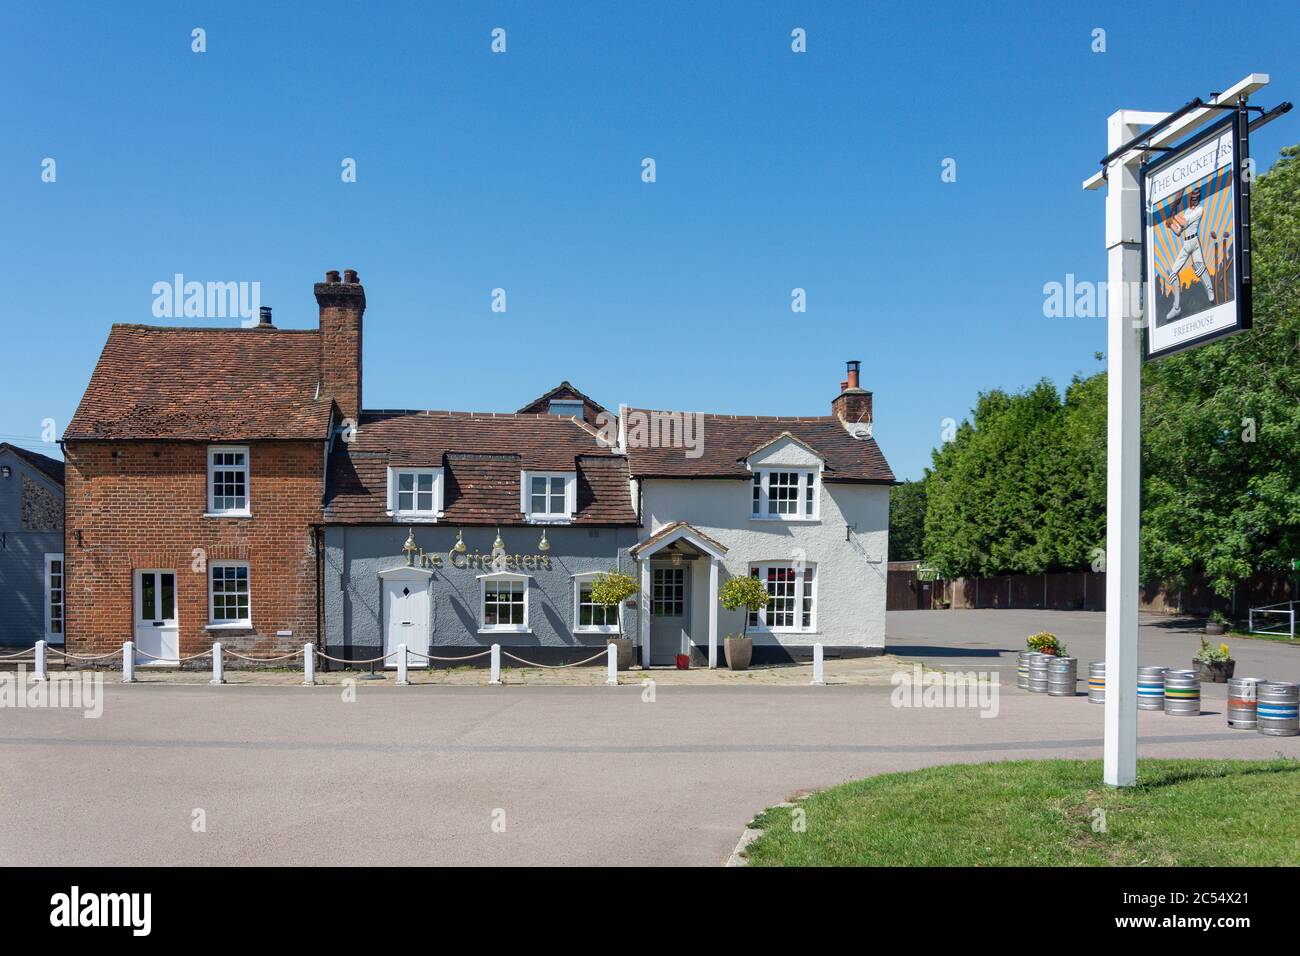 The Cricketers Pub, The Green, Sarratt, Hertfordshire, England, United Kingdom Stock Photo